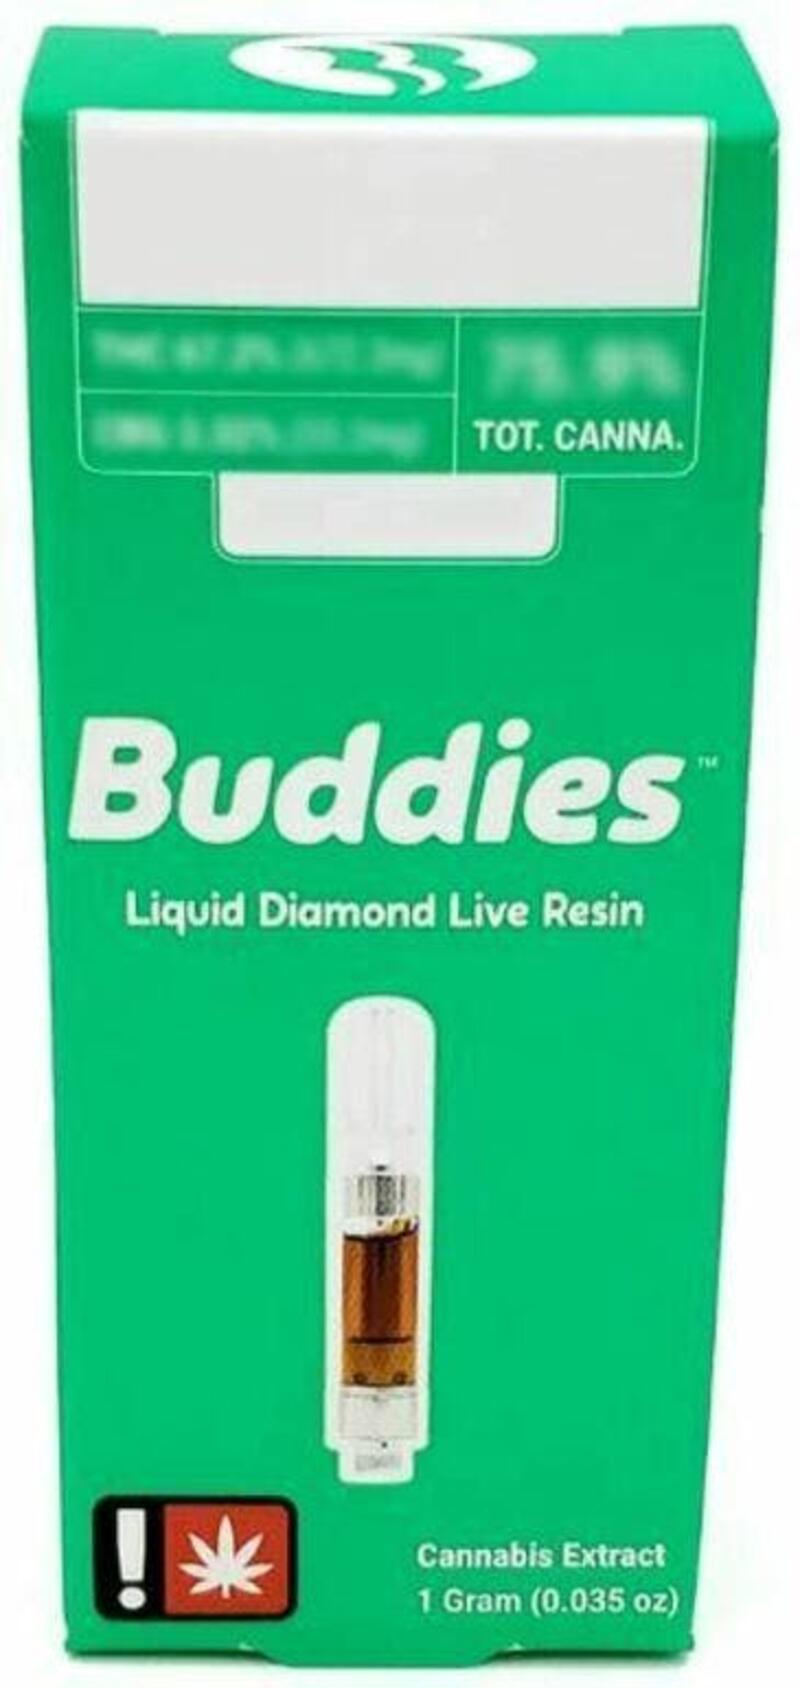 Buddies Liquid Diamonds Live Resin Cart 1g (I) Papaya Cake